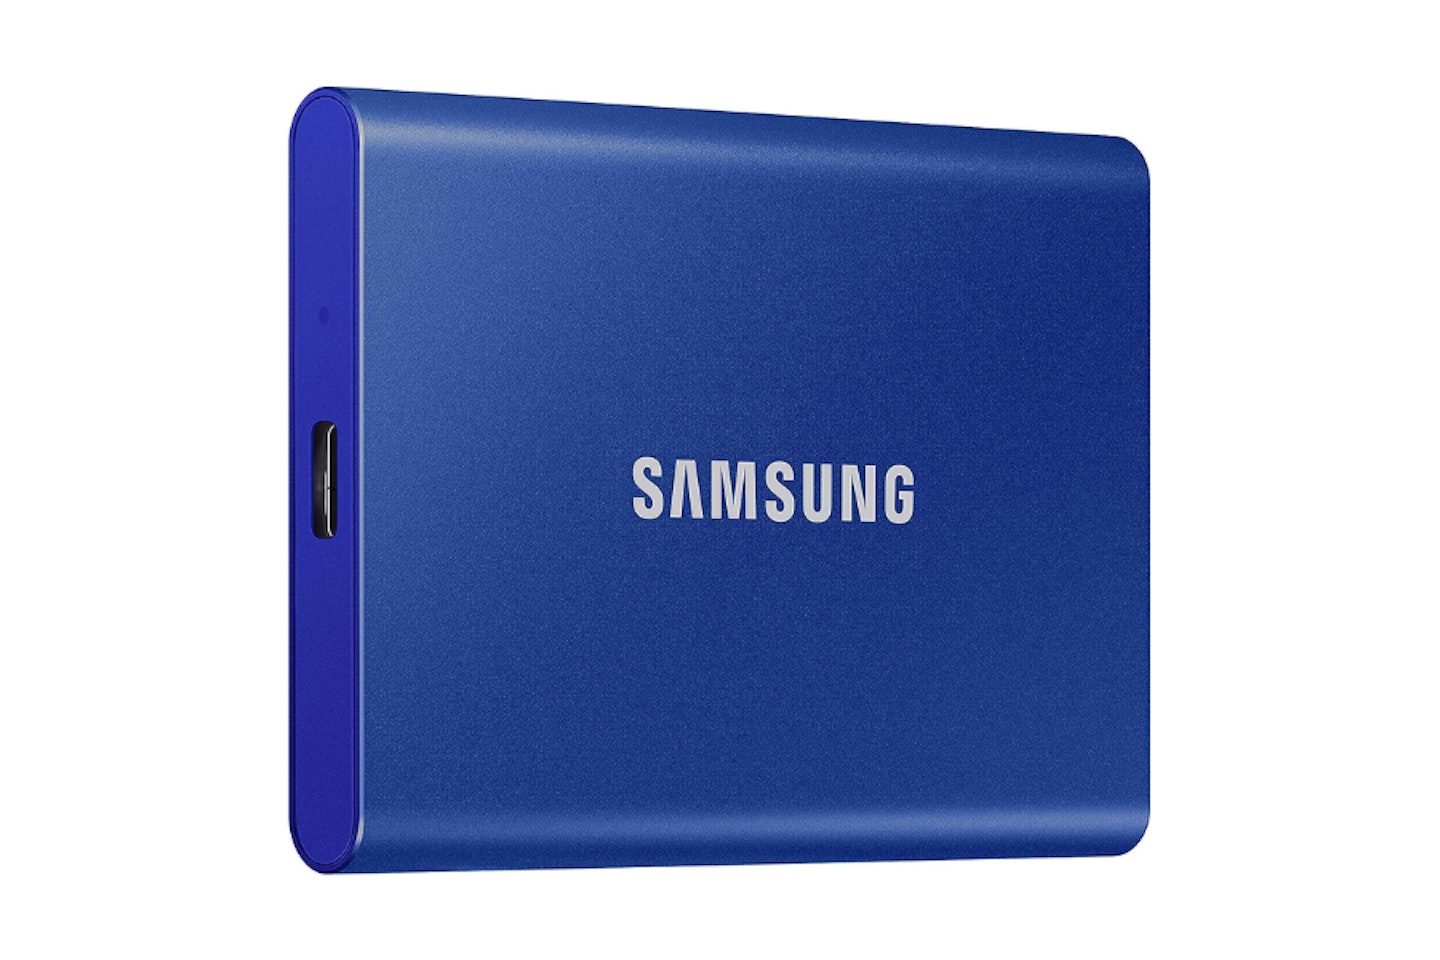 Samsung T7 Portable SSD - 1 TB